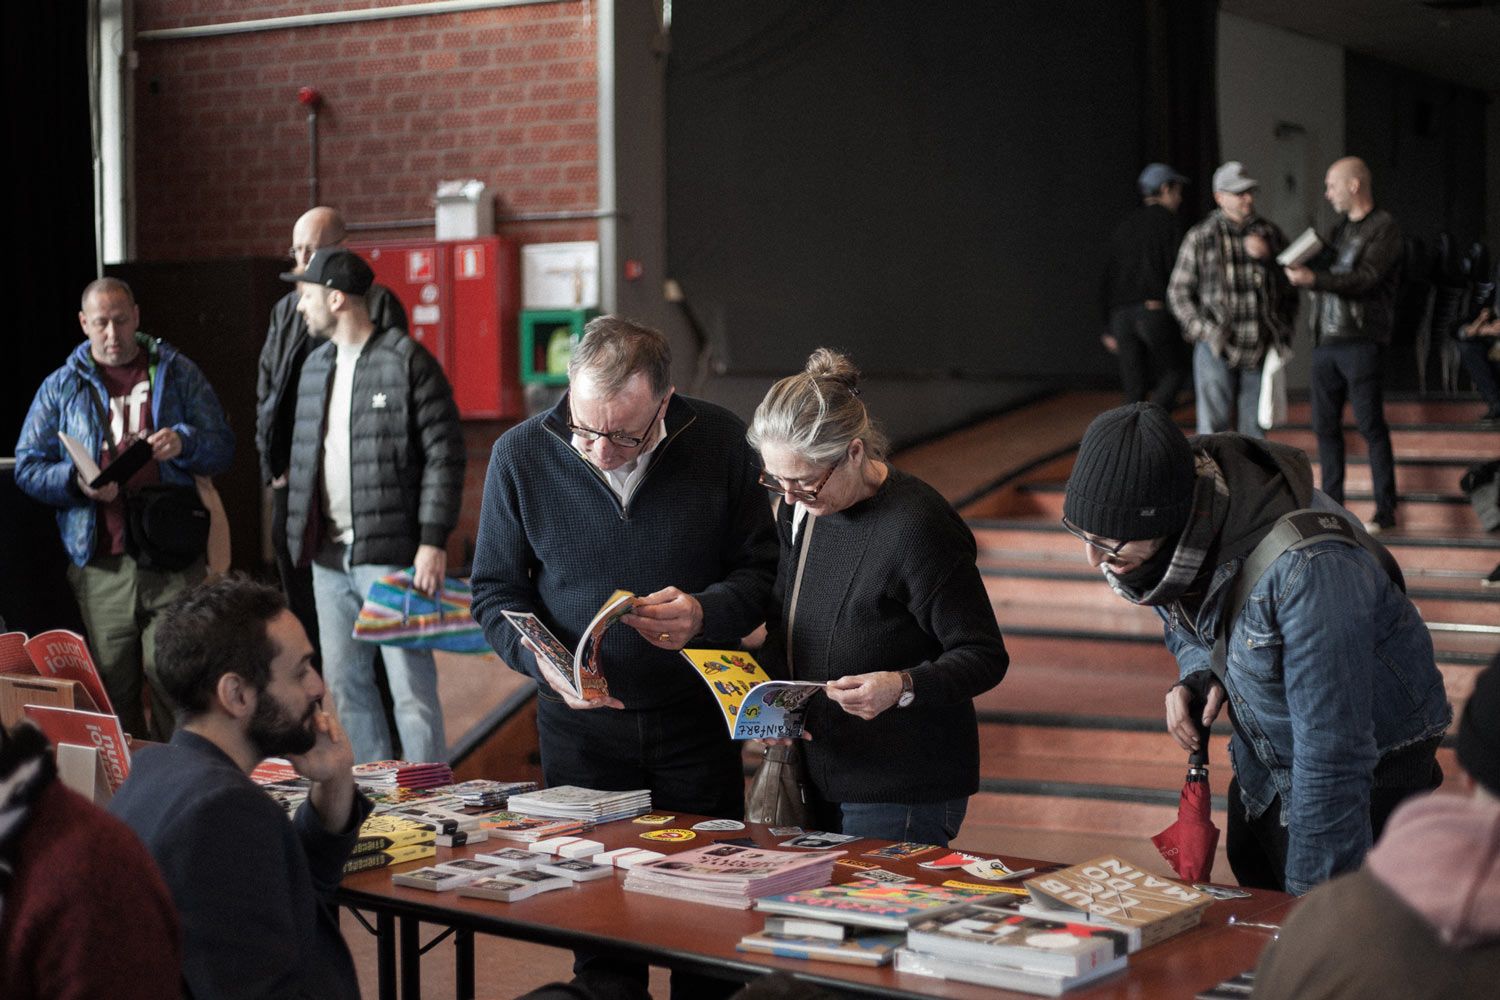 Unlock Book Fair Amsterdam 2018 7